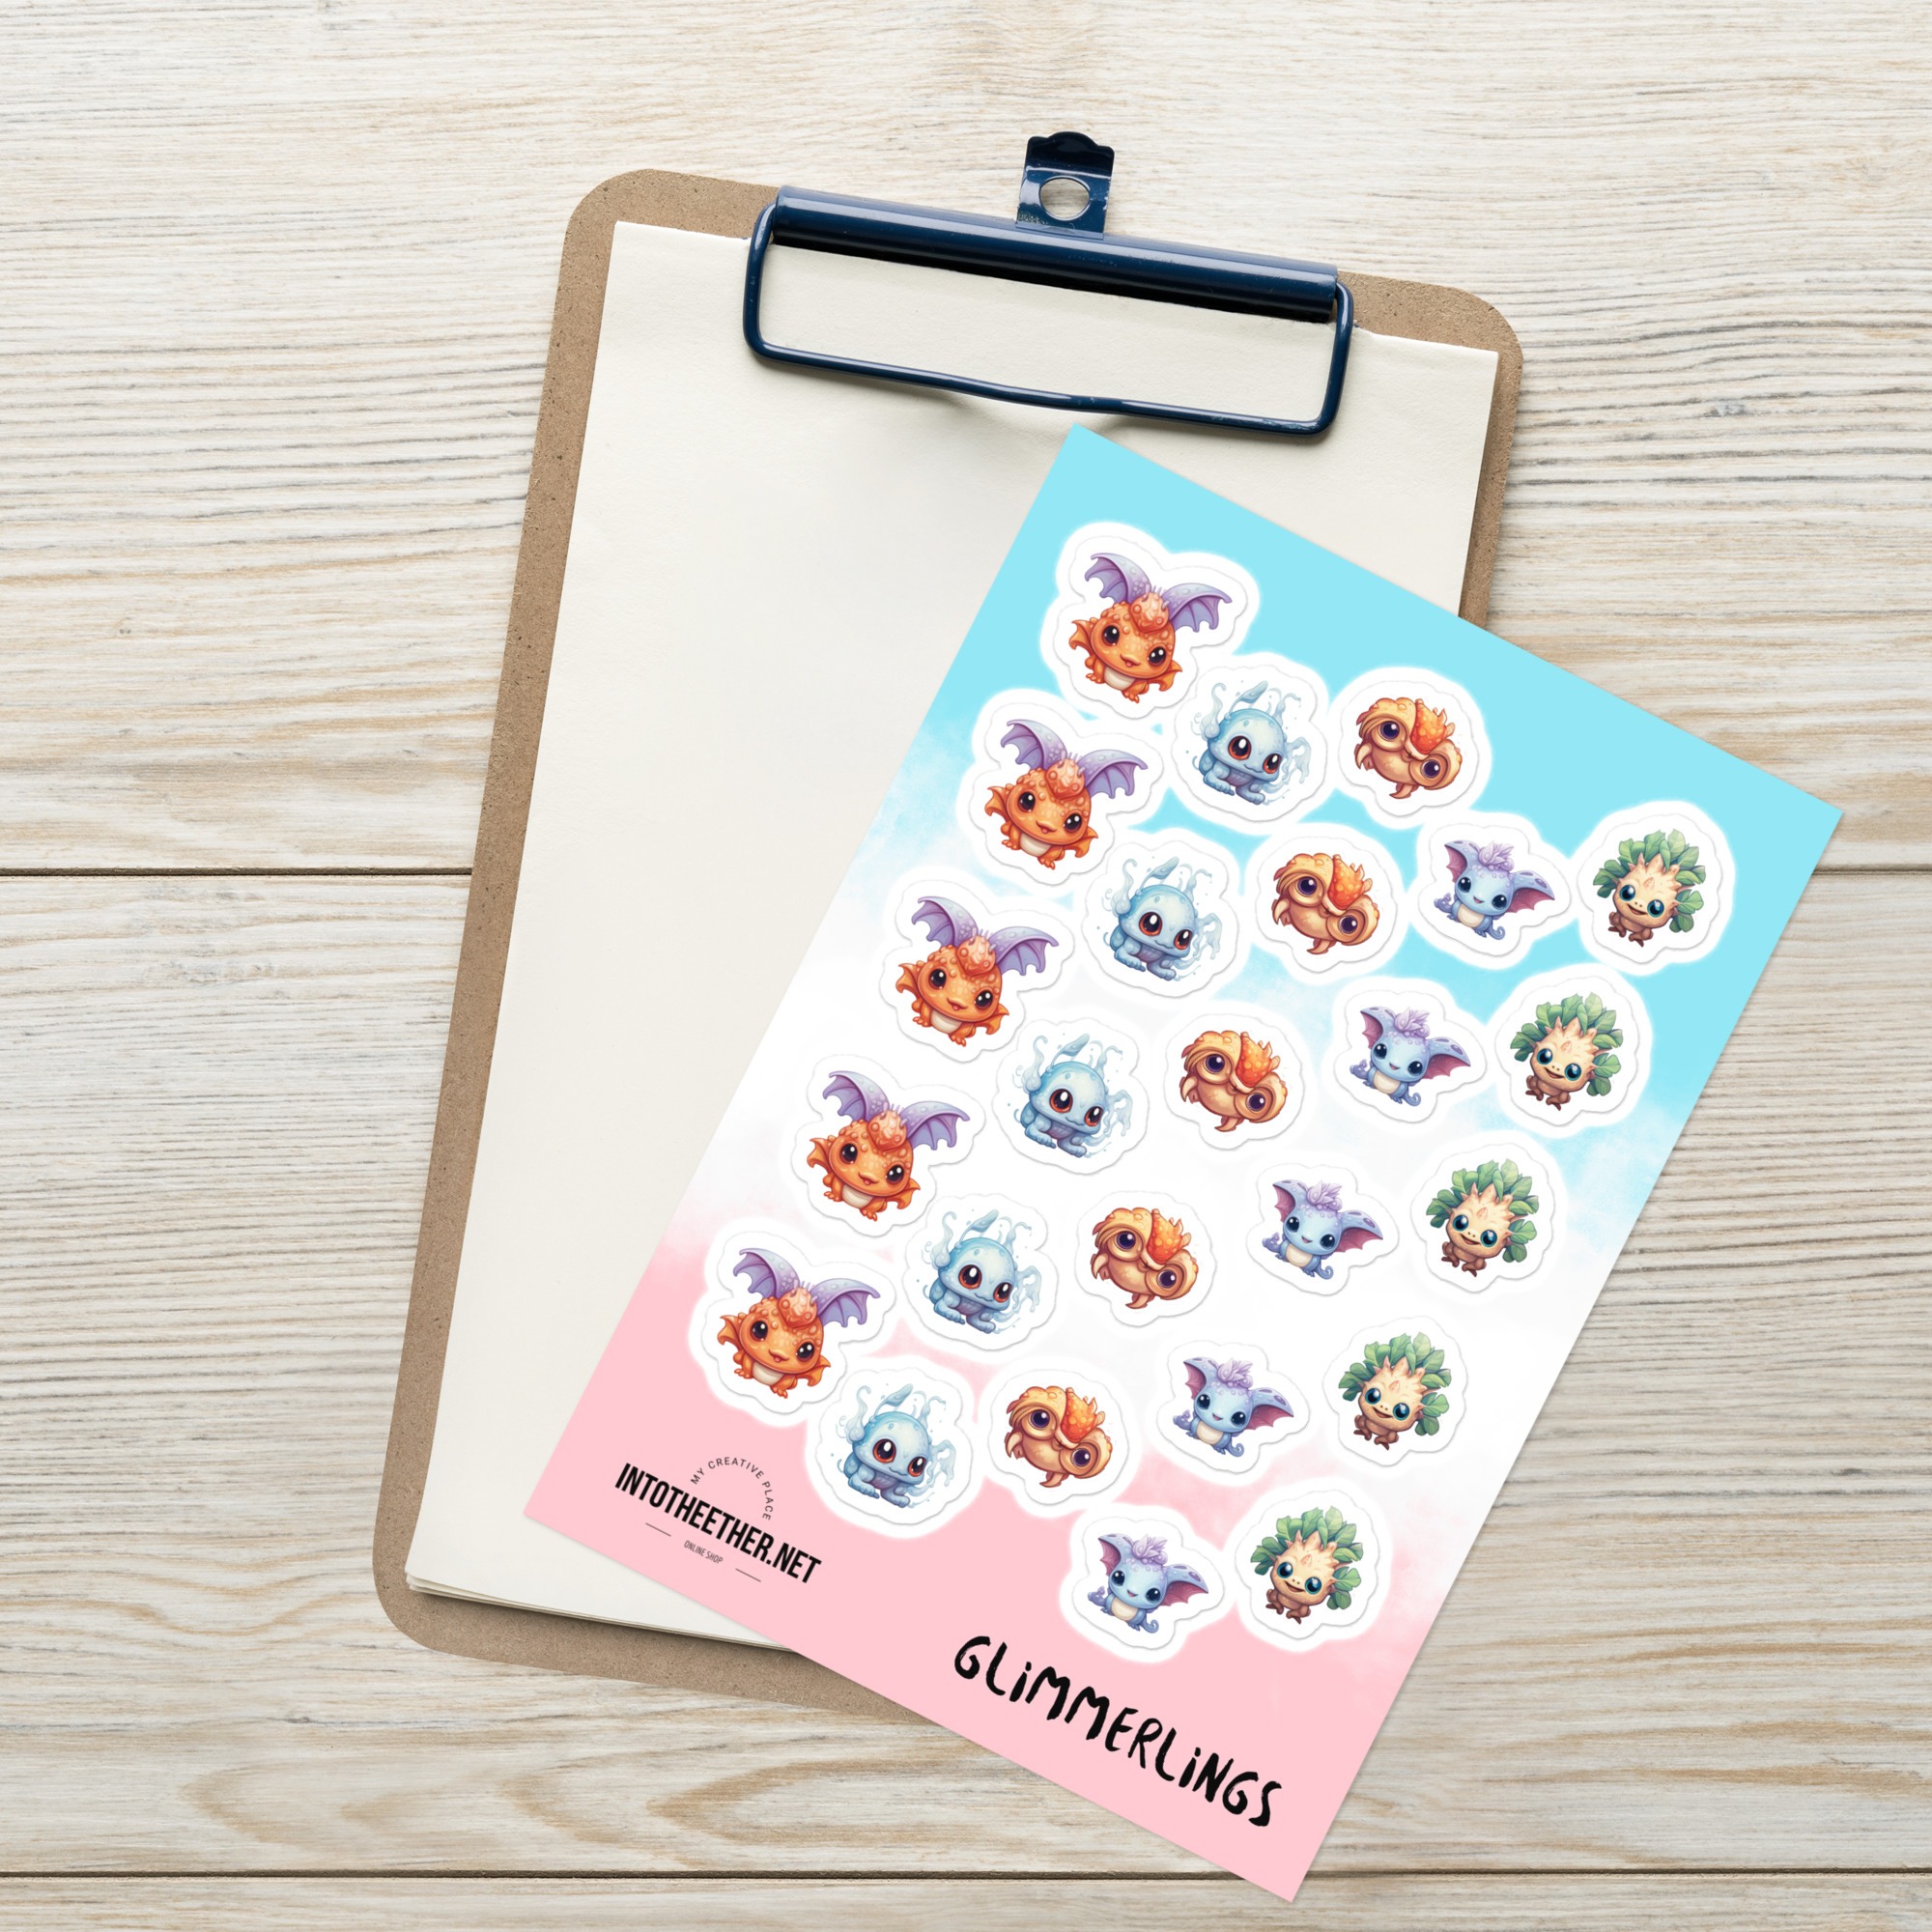 Glimmerlings! | Cute Fantasy Creatures | Gen 1 |  Planner / Sticker Sheets (25 pc.)